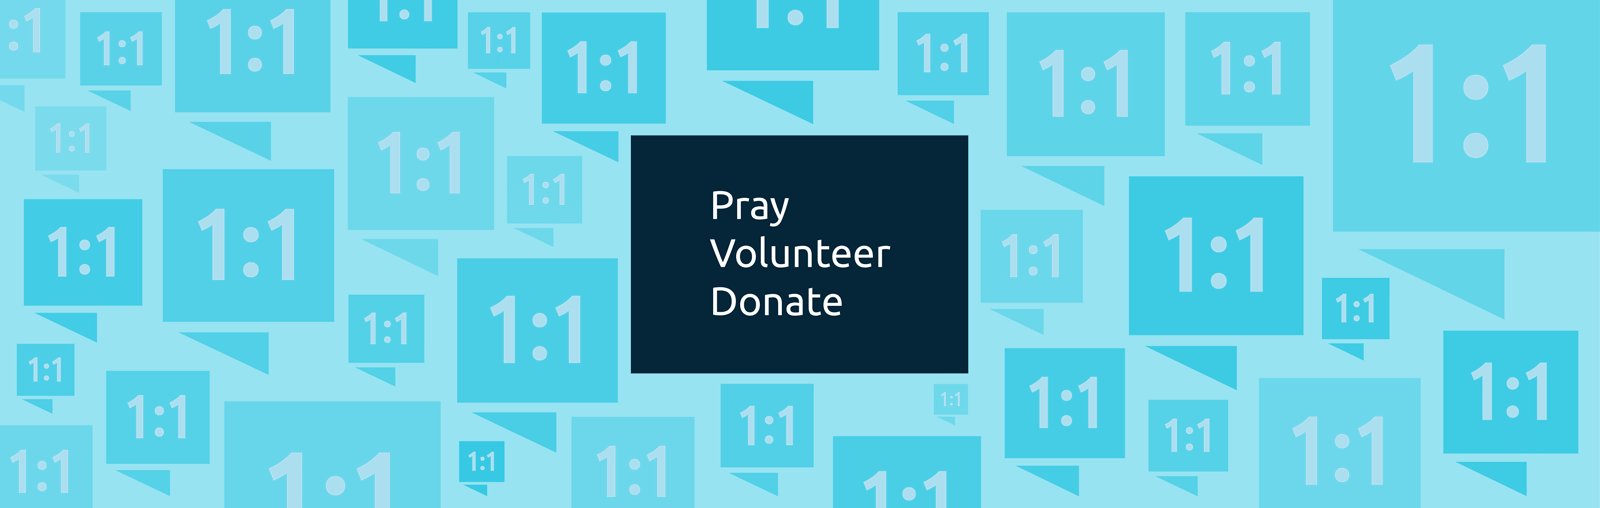 Pray, Volunteer, Donate